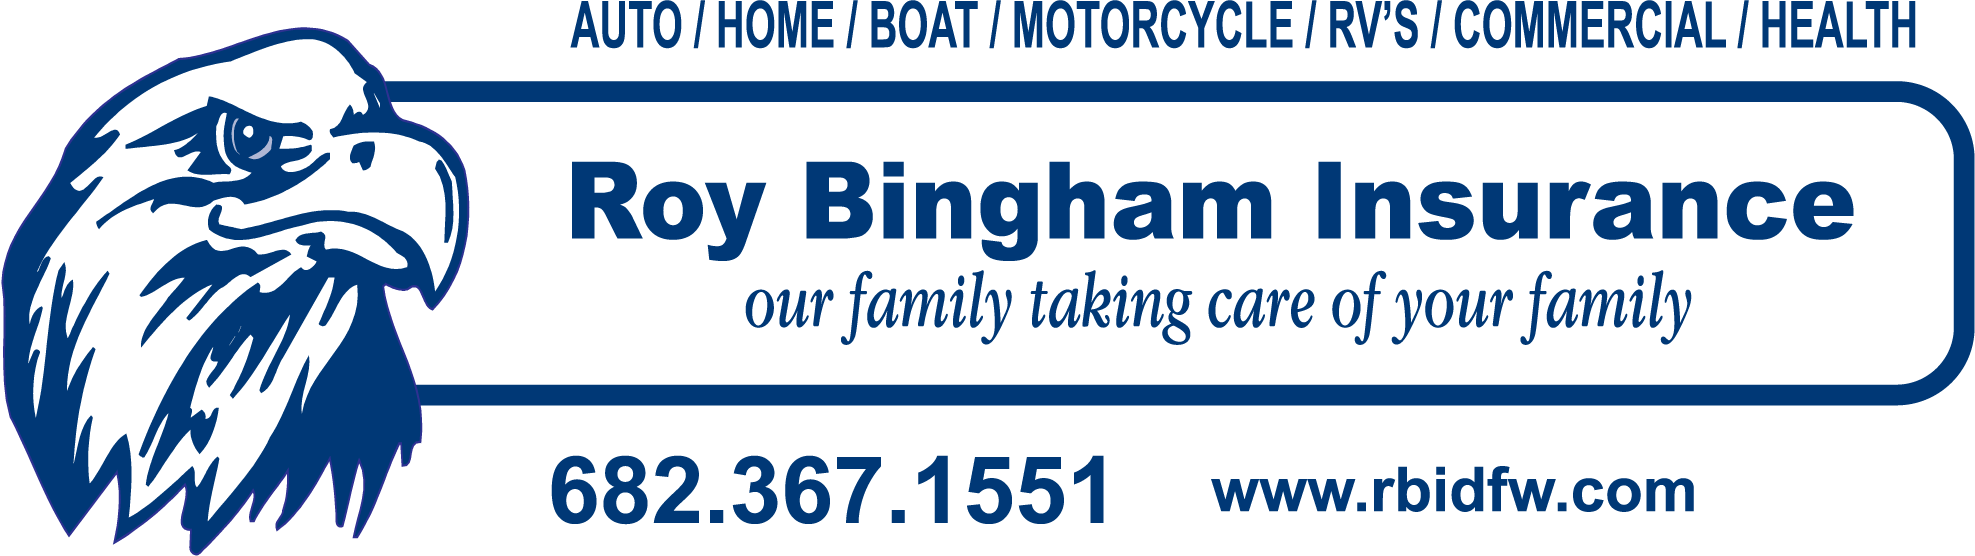 Roy Bingham Insurance Logo